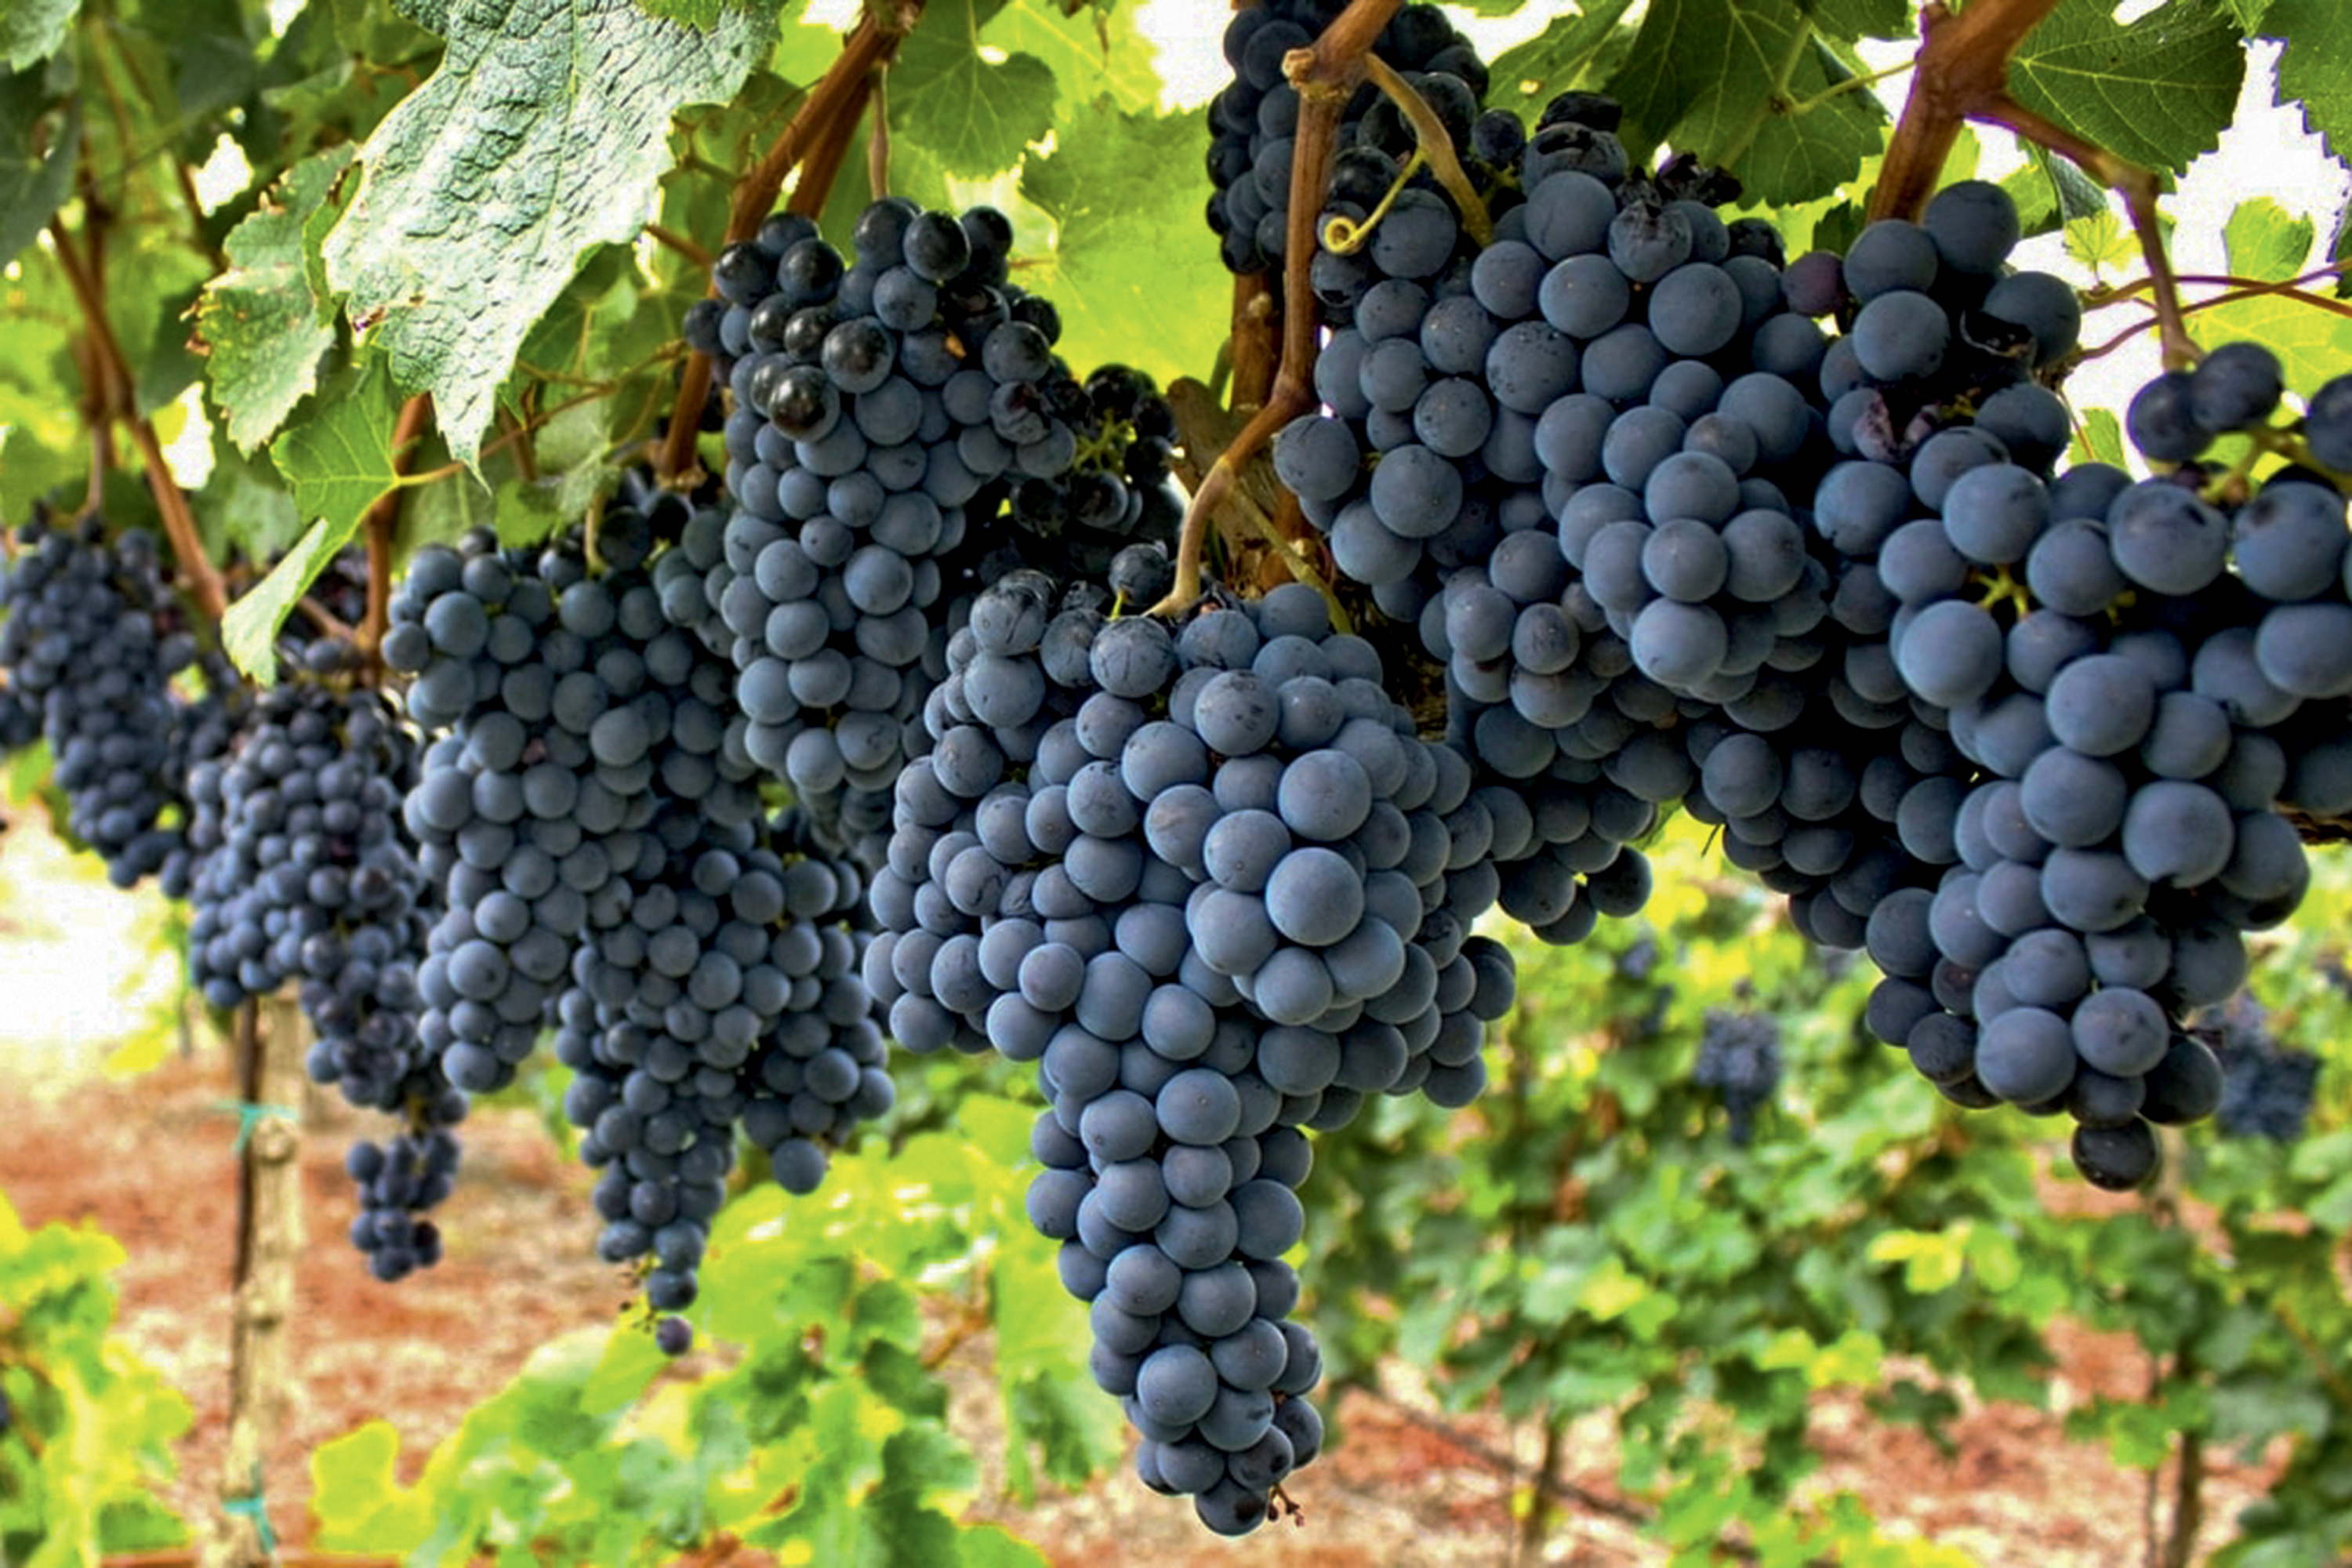 CULTIVO - Pinot noir: a uva é usada no primeiro espumante do Brasil a obter o selo -